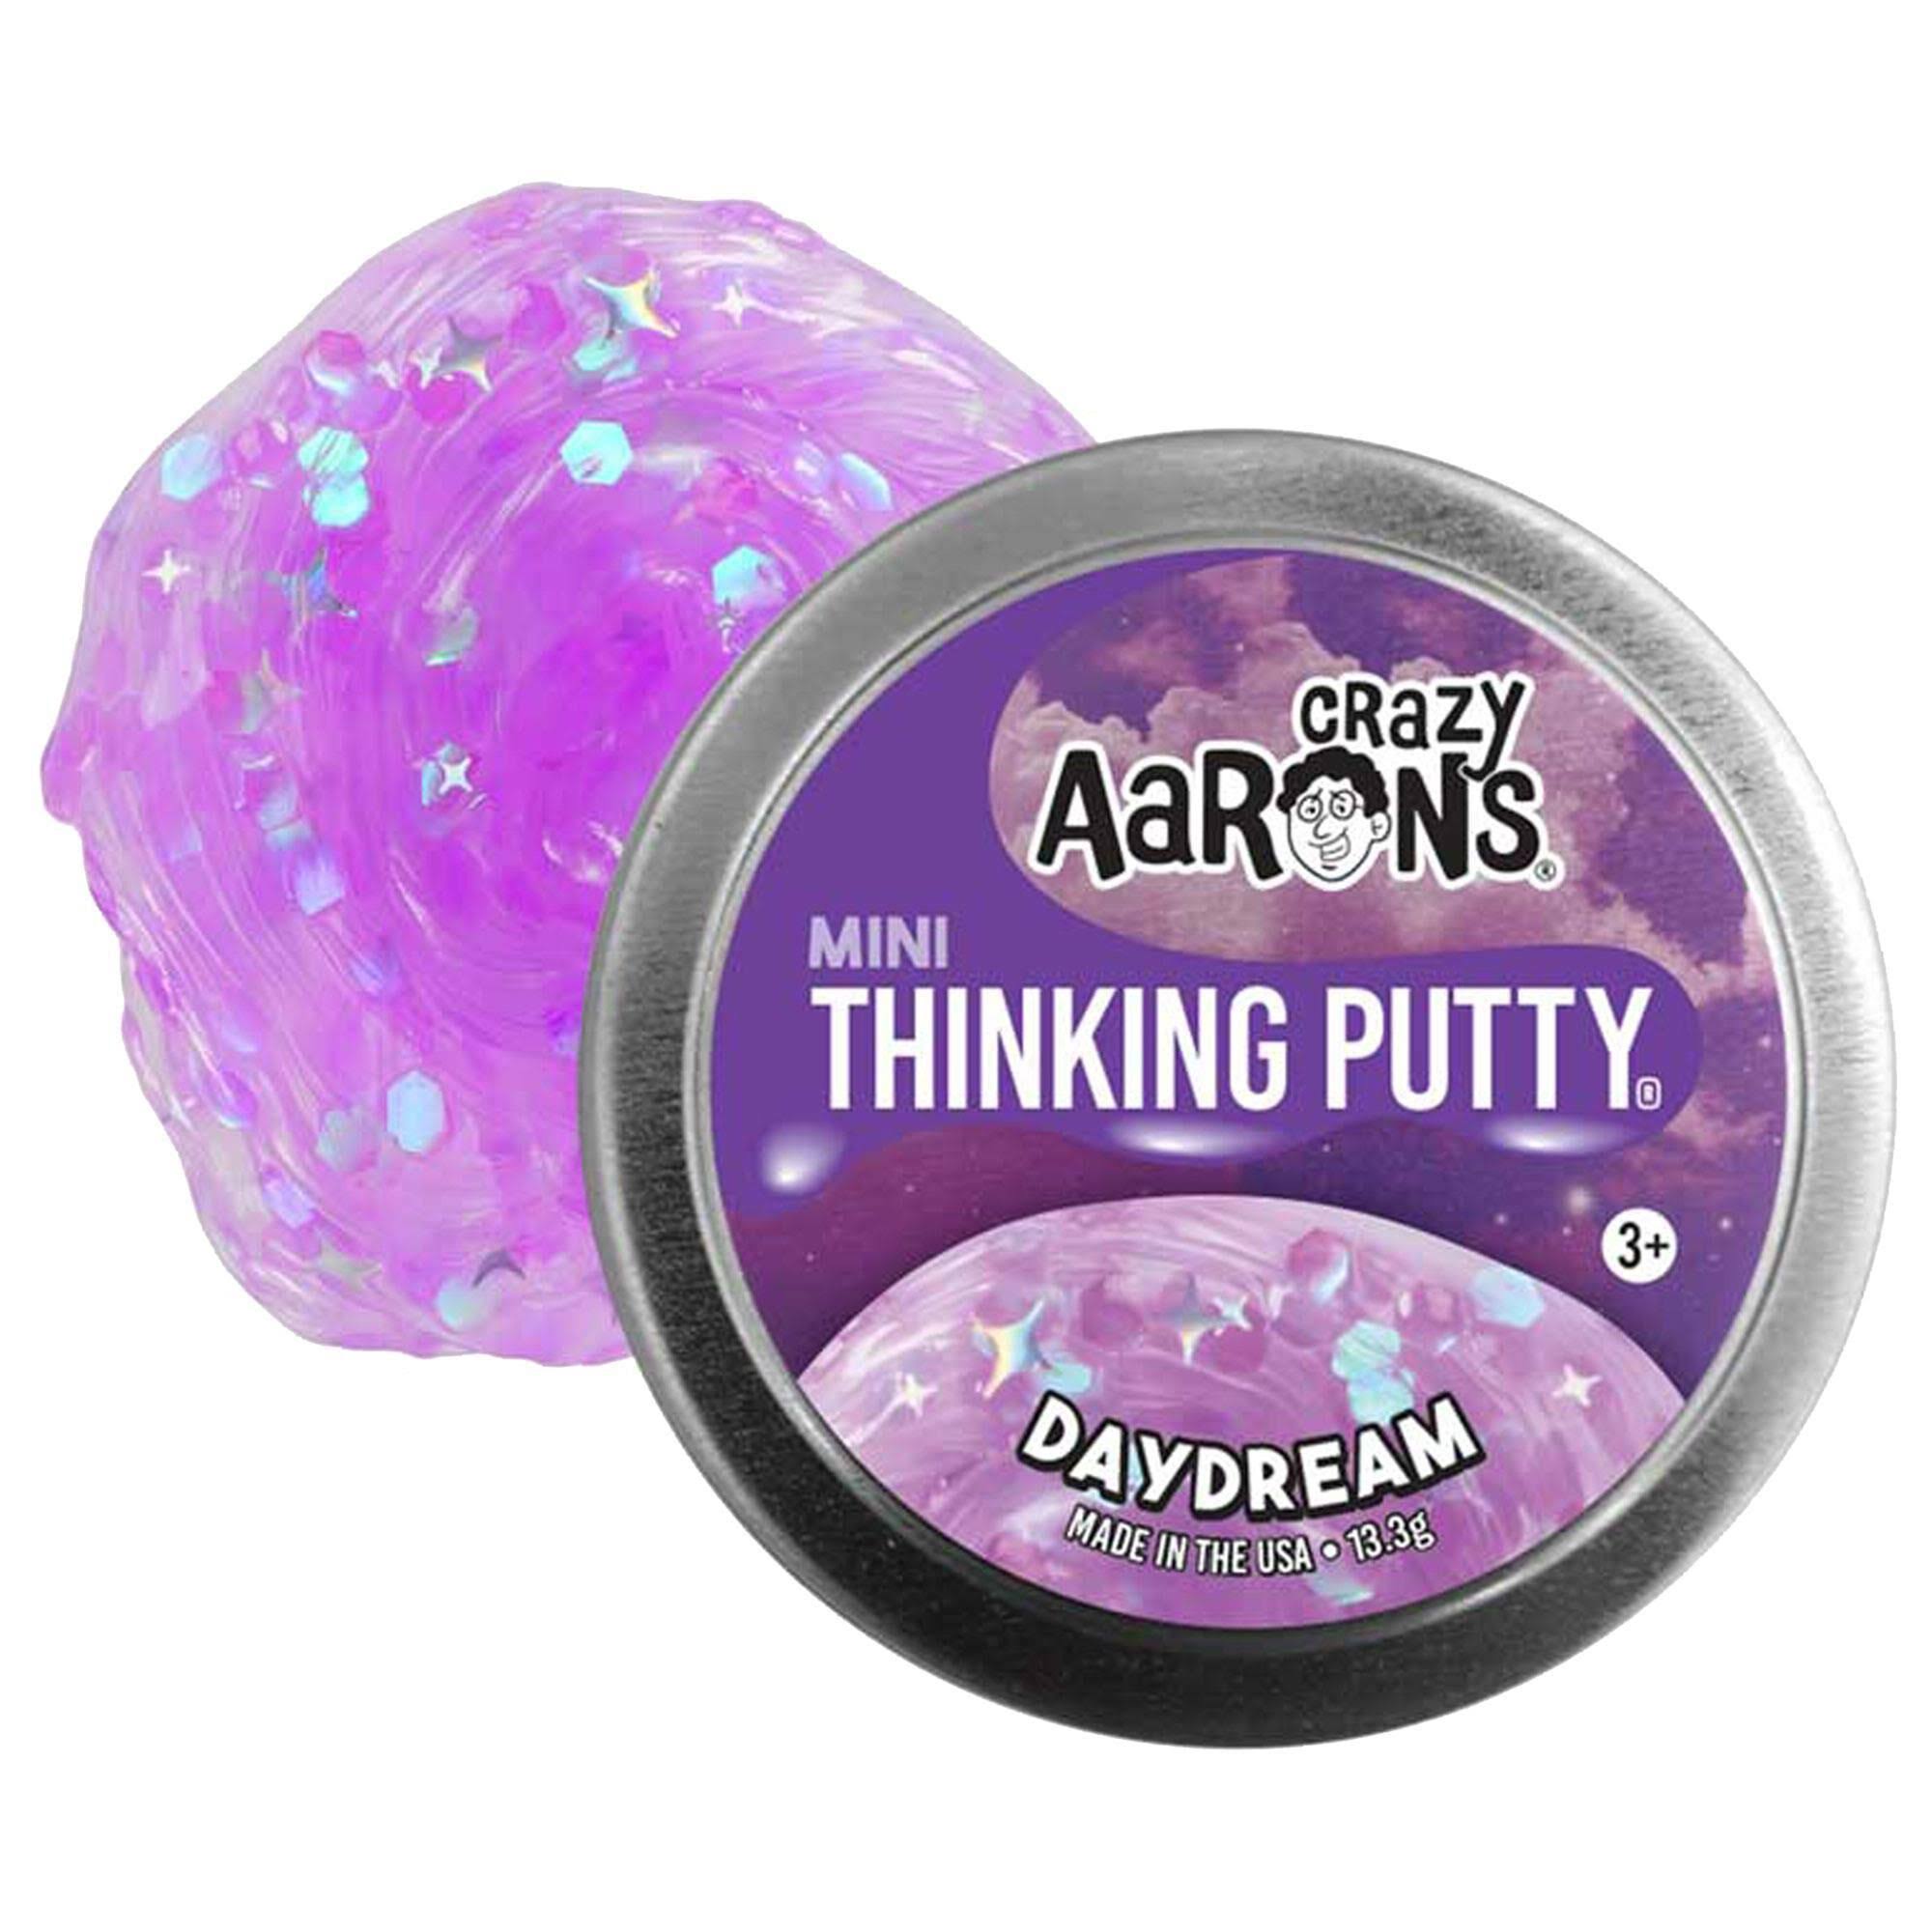 Crazy Aaron's Thinking Putty Mini Tin - Day Dream